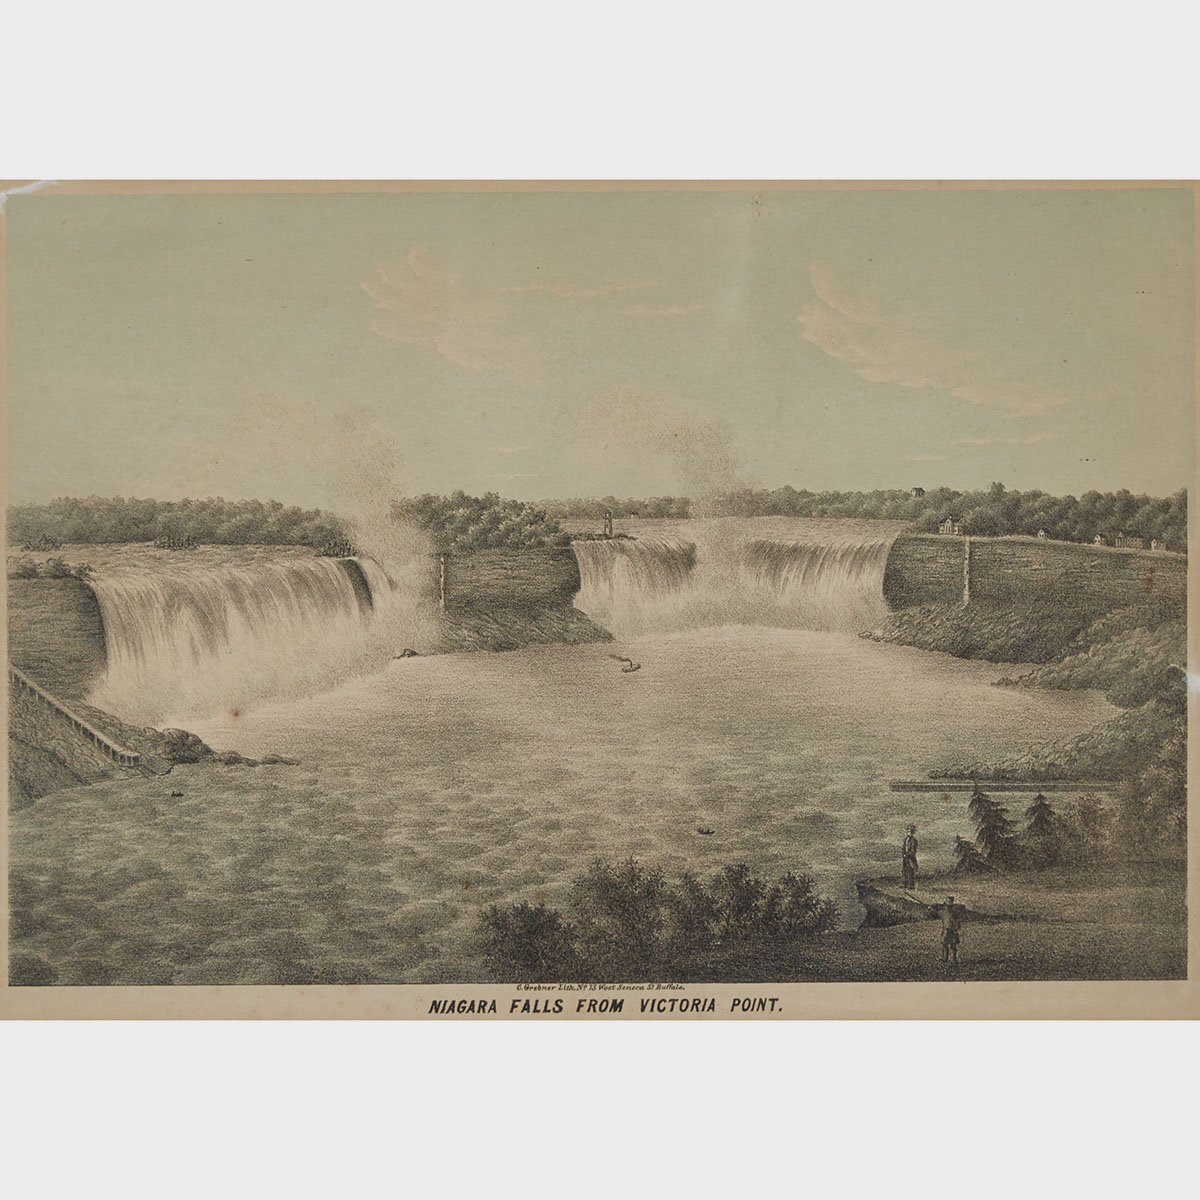 C. Grebner Lith. (Firm, Buffalo) (19th Century)